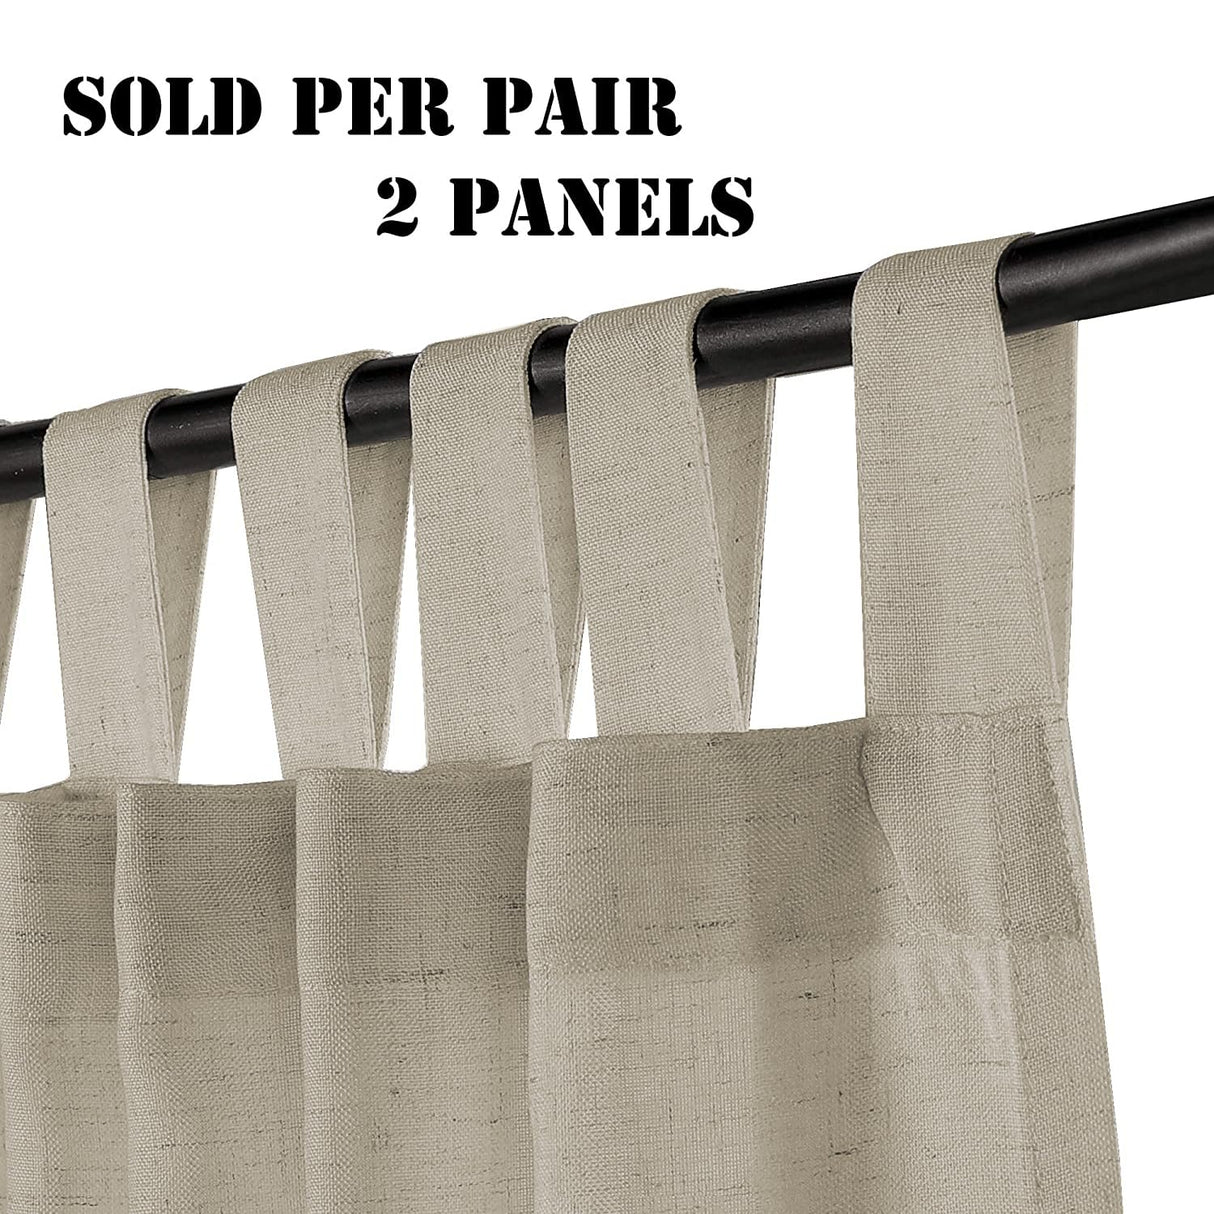 PrimeBeau Natural Linen Mix Tab Top Curtains, Light Filtering Panels (Set of 2)